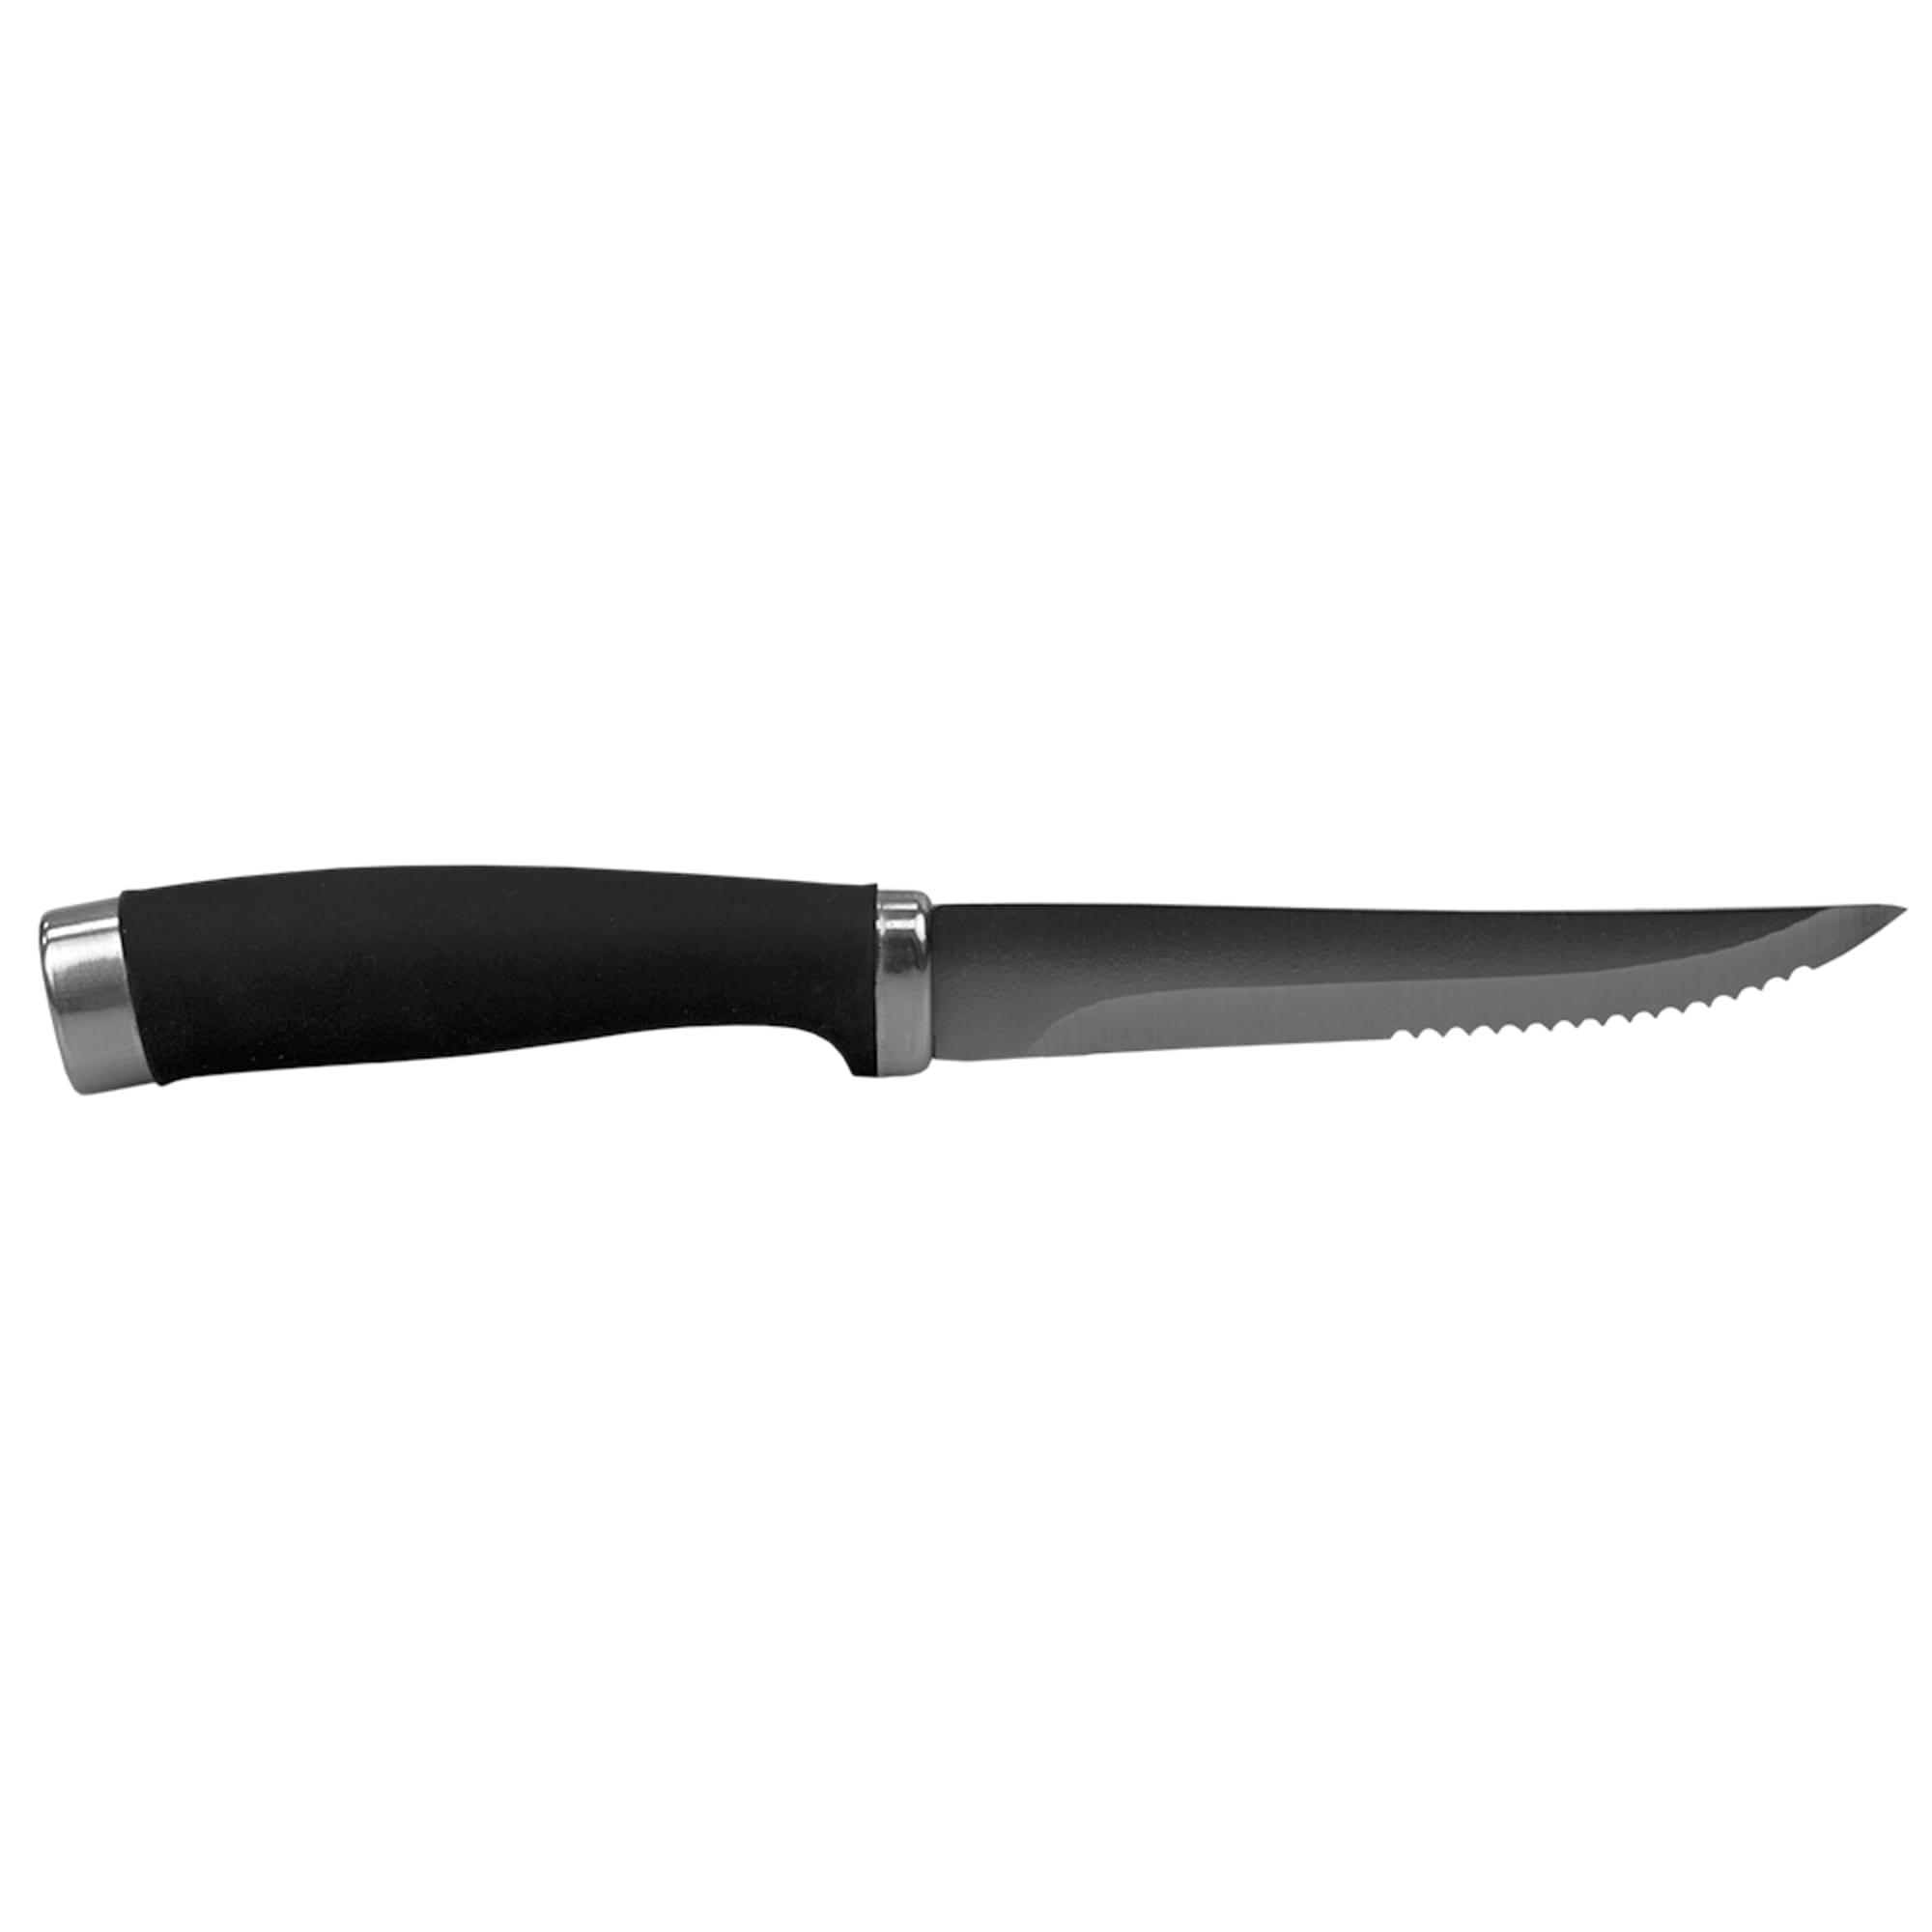 Home Basics Stainless Steel Steak Knives with Non-Slip Handles, (Set of 4),  Black $5.00 EACH, CASE PACK OF 12